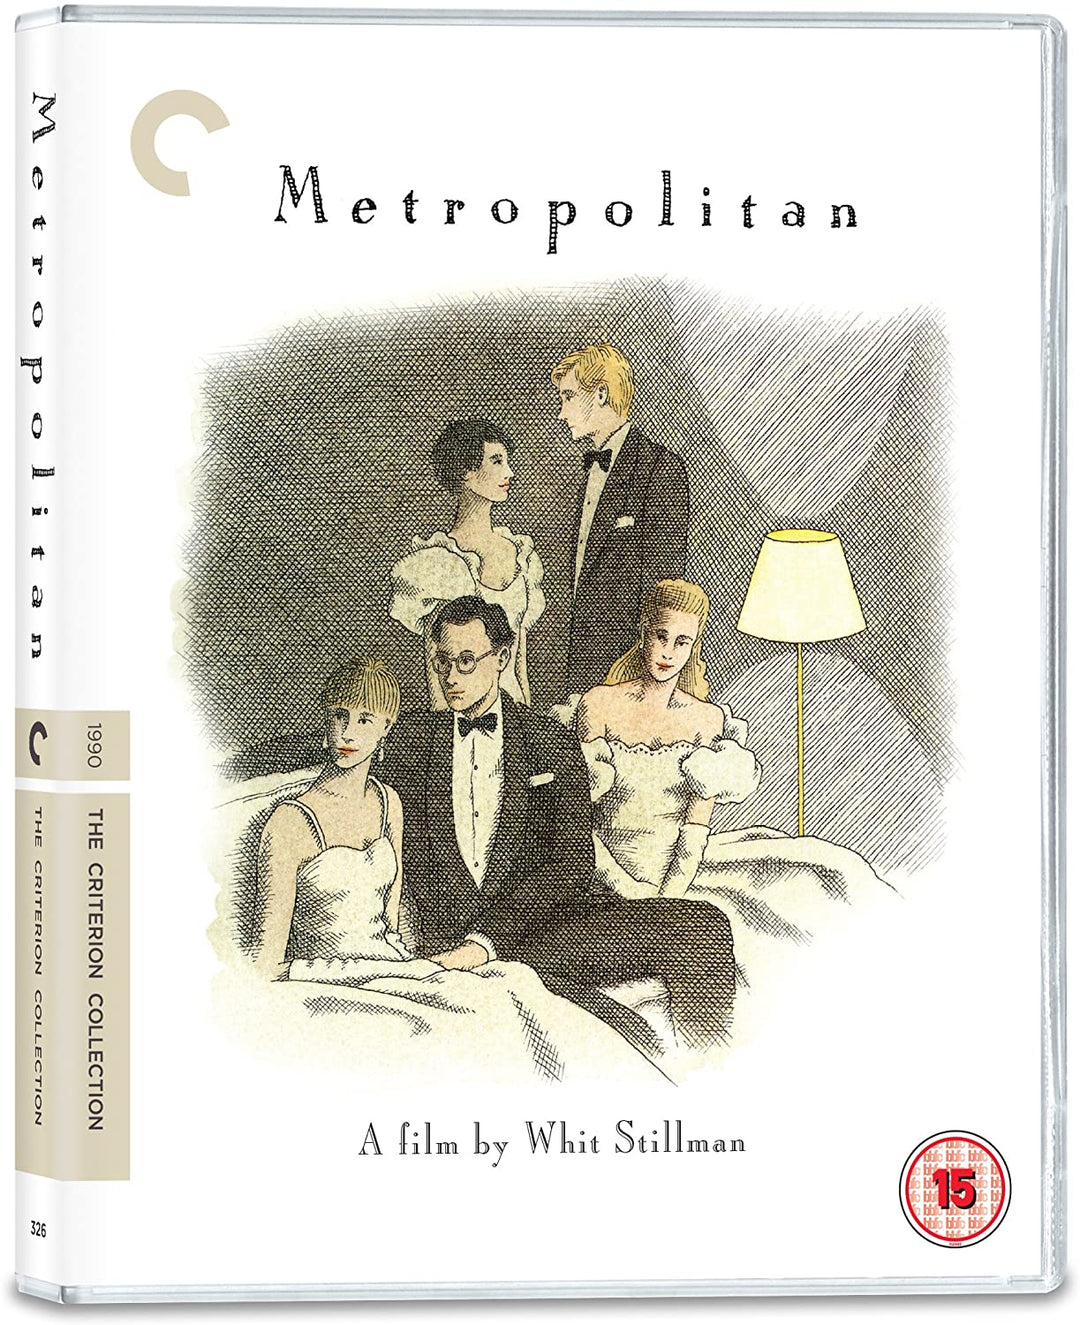 Metropolitan [The Criterion Collection] [Blu-ray]